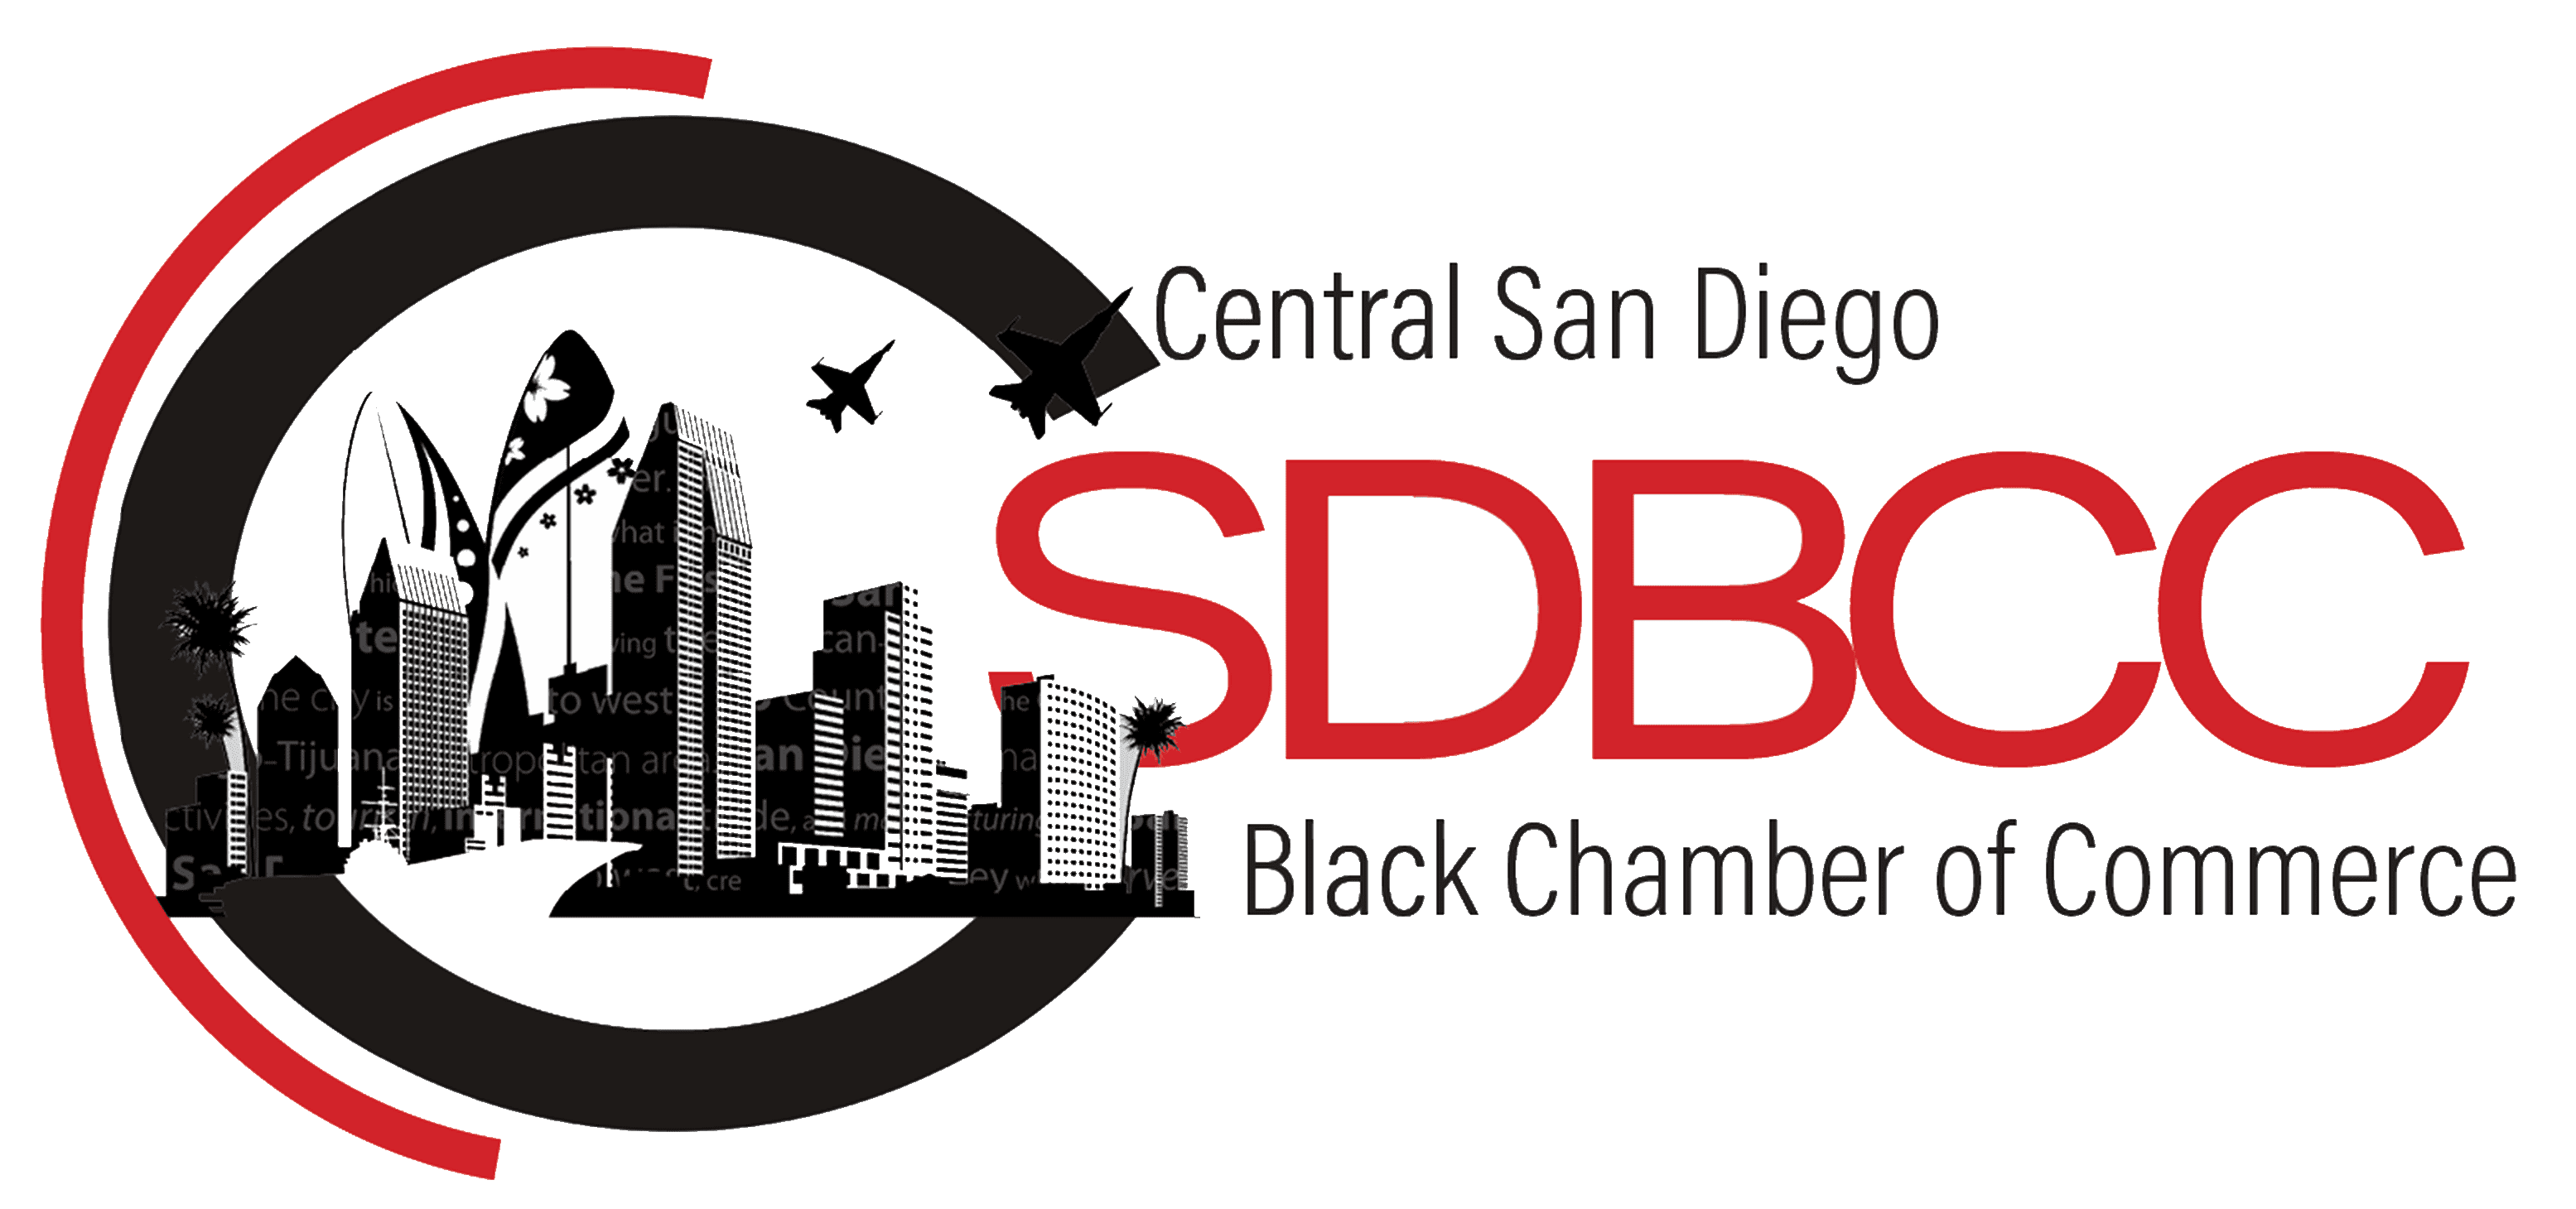 CSDBCC Logo